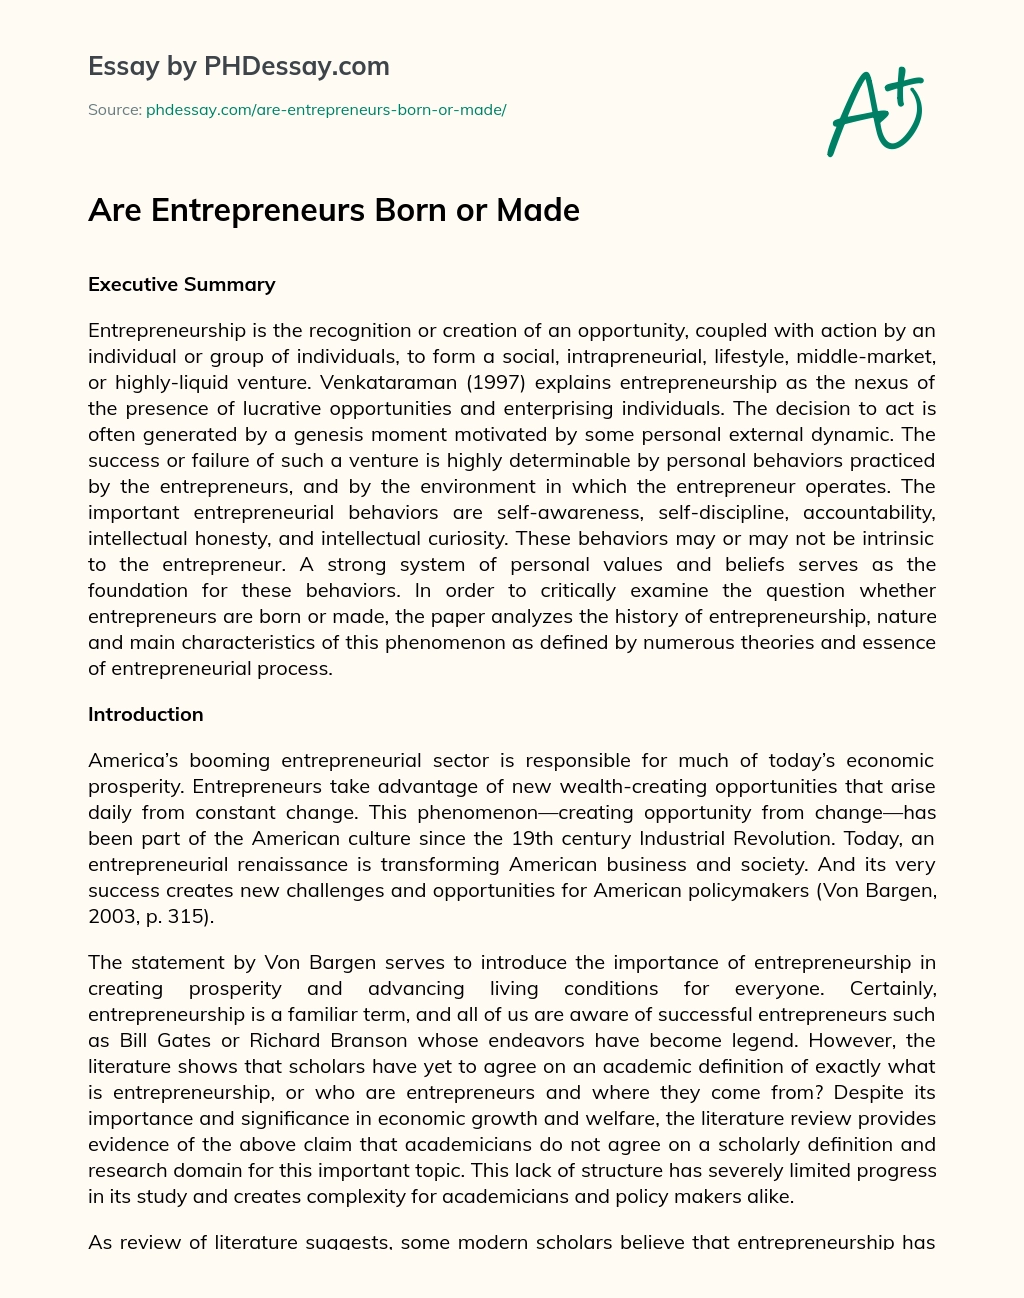 Are Entrepreneurs Born or Made essay